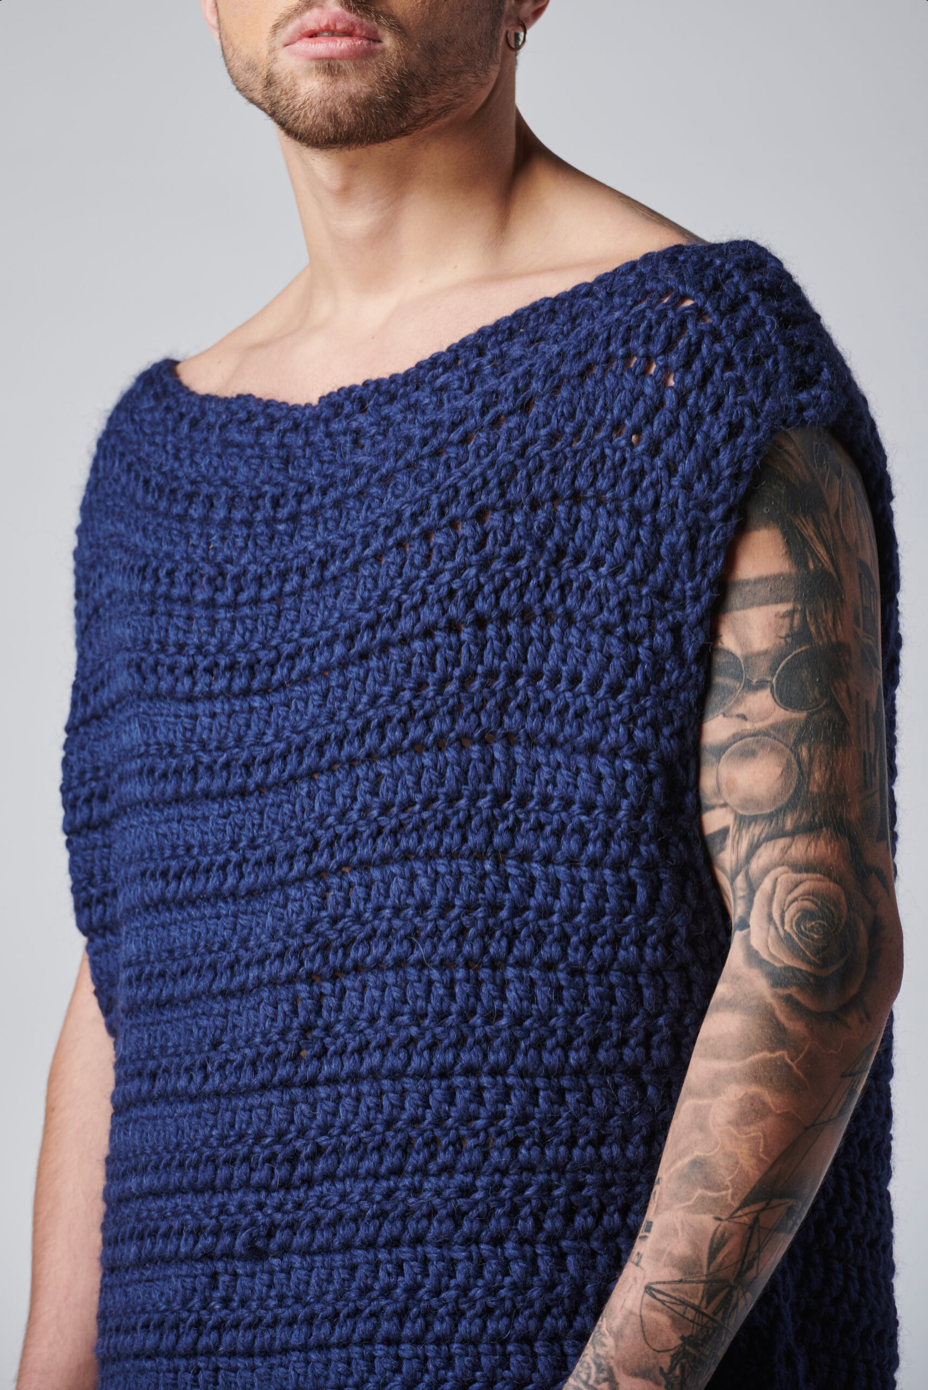 TIISHATSU hand knitted t-shirt